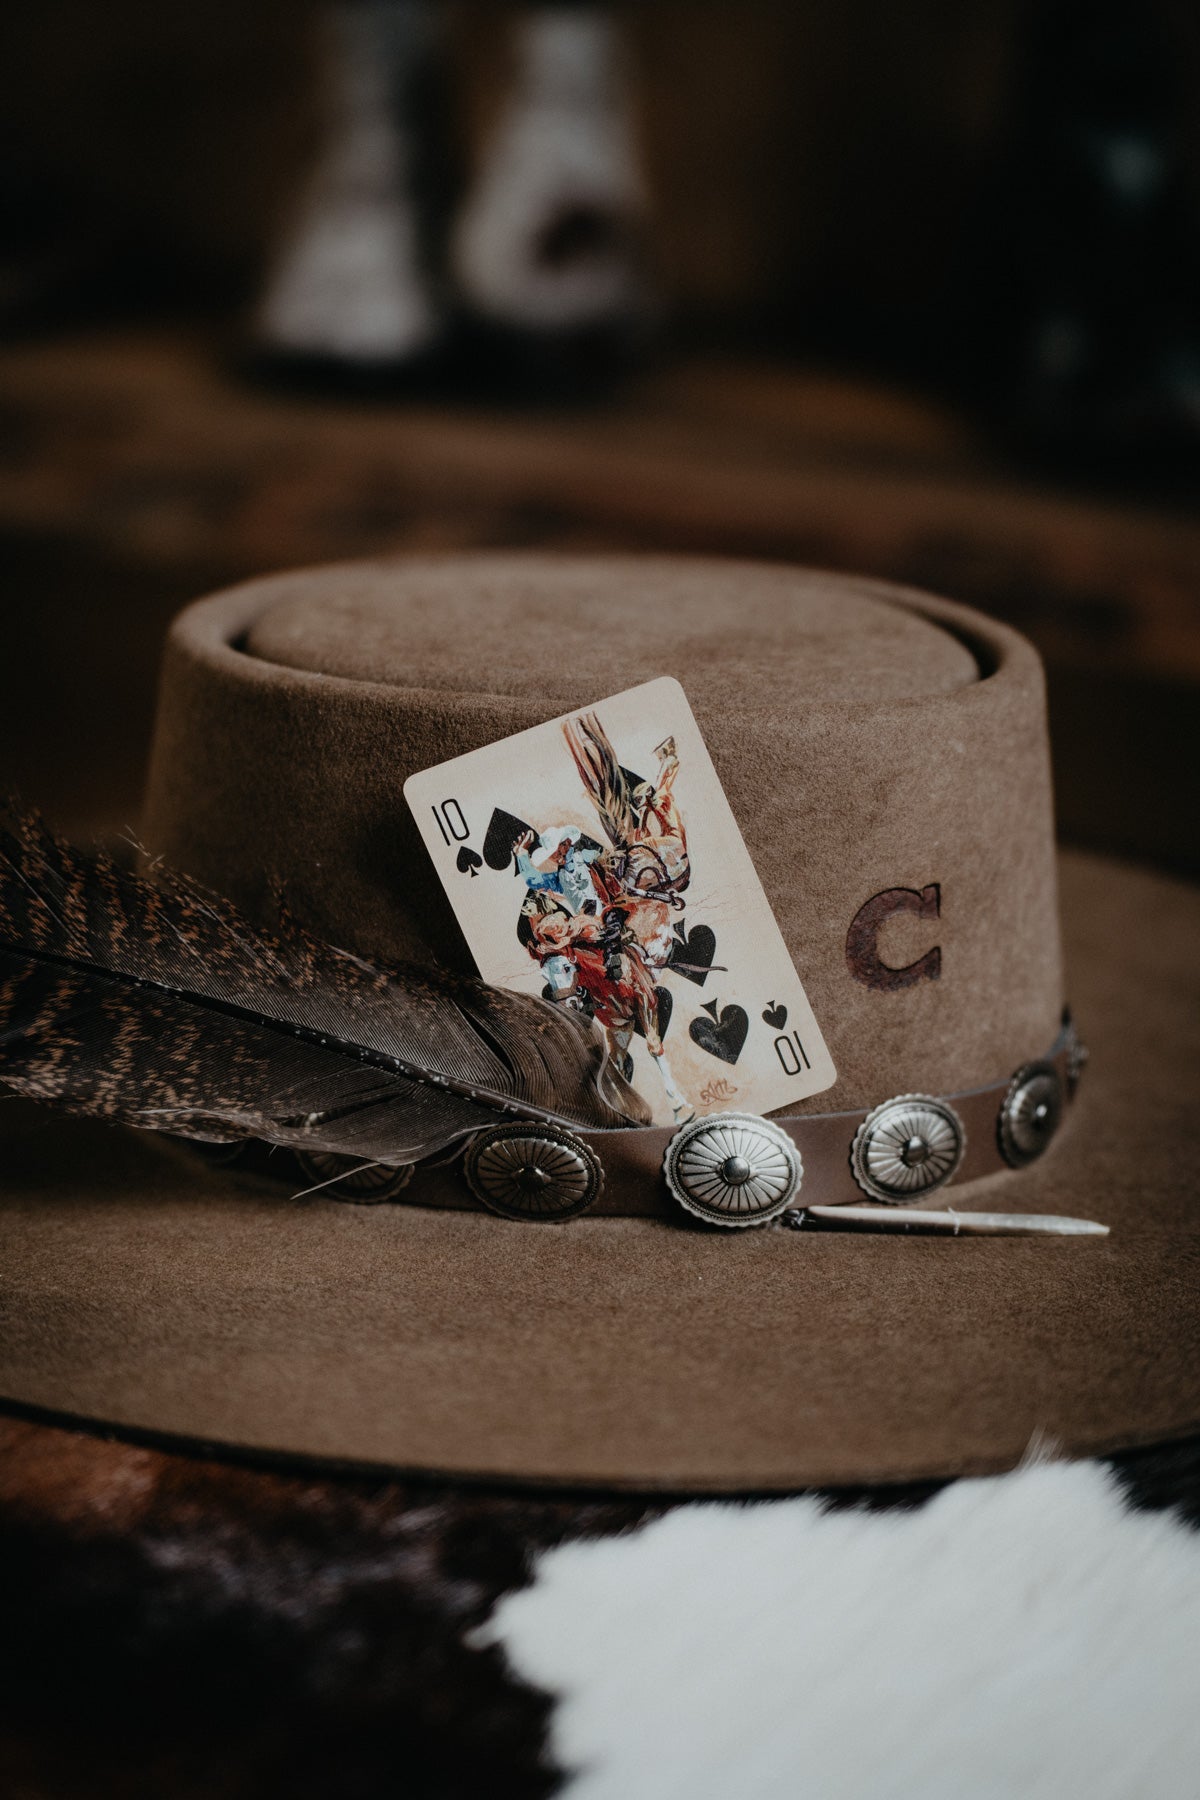 Andrea Murphy Western Artwork Playing Card Deck